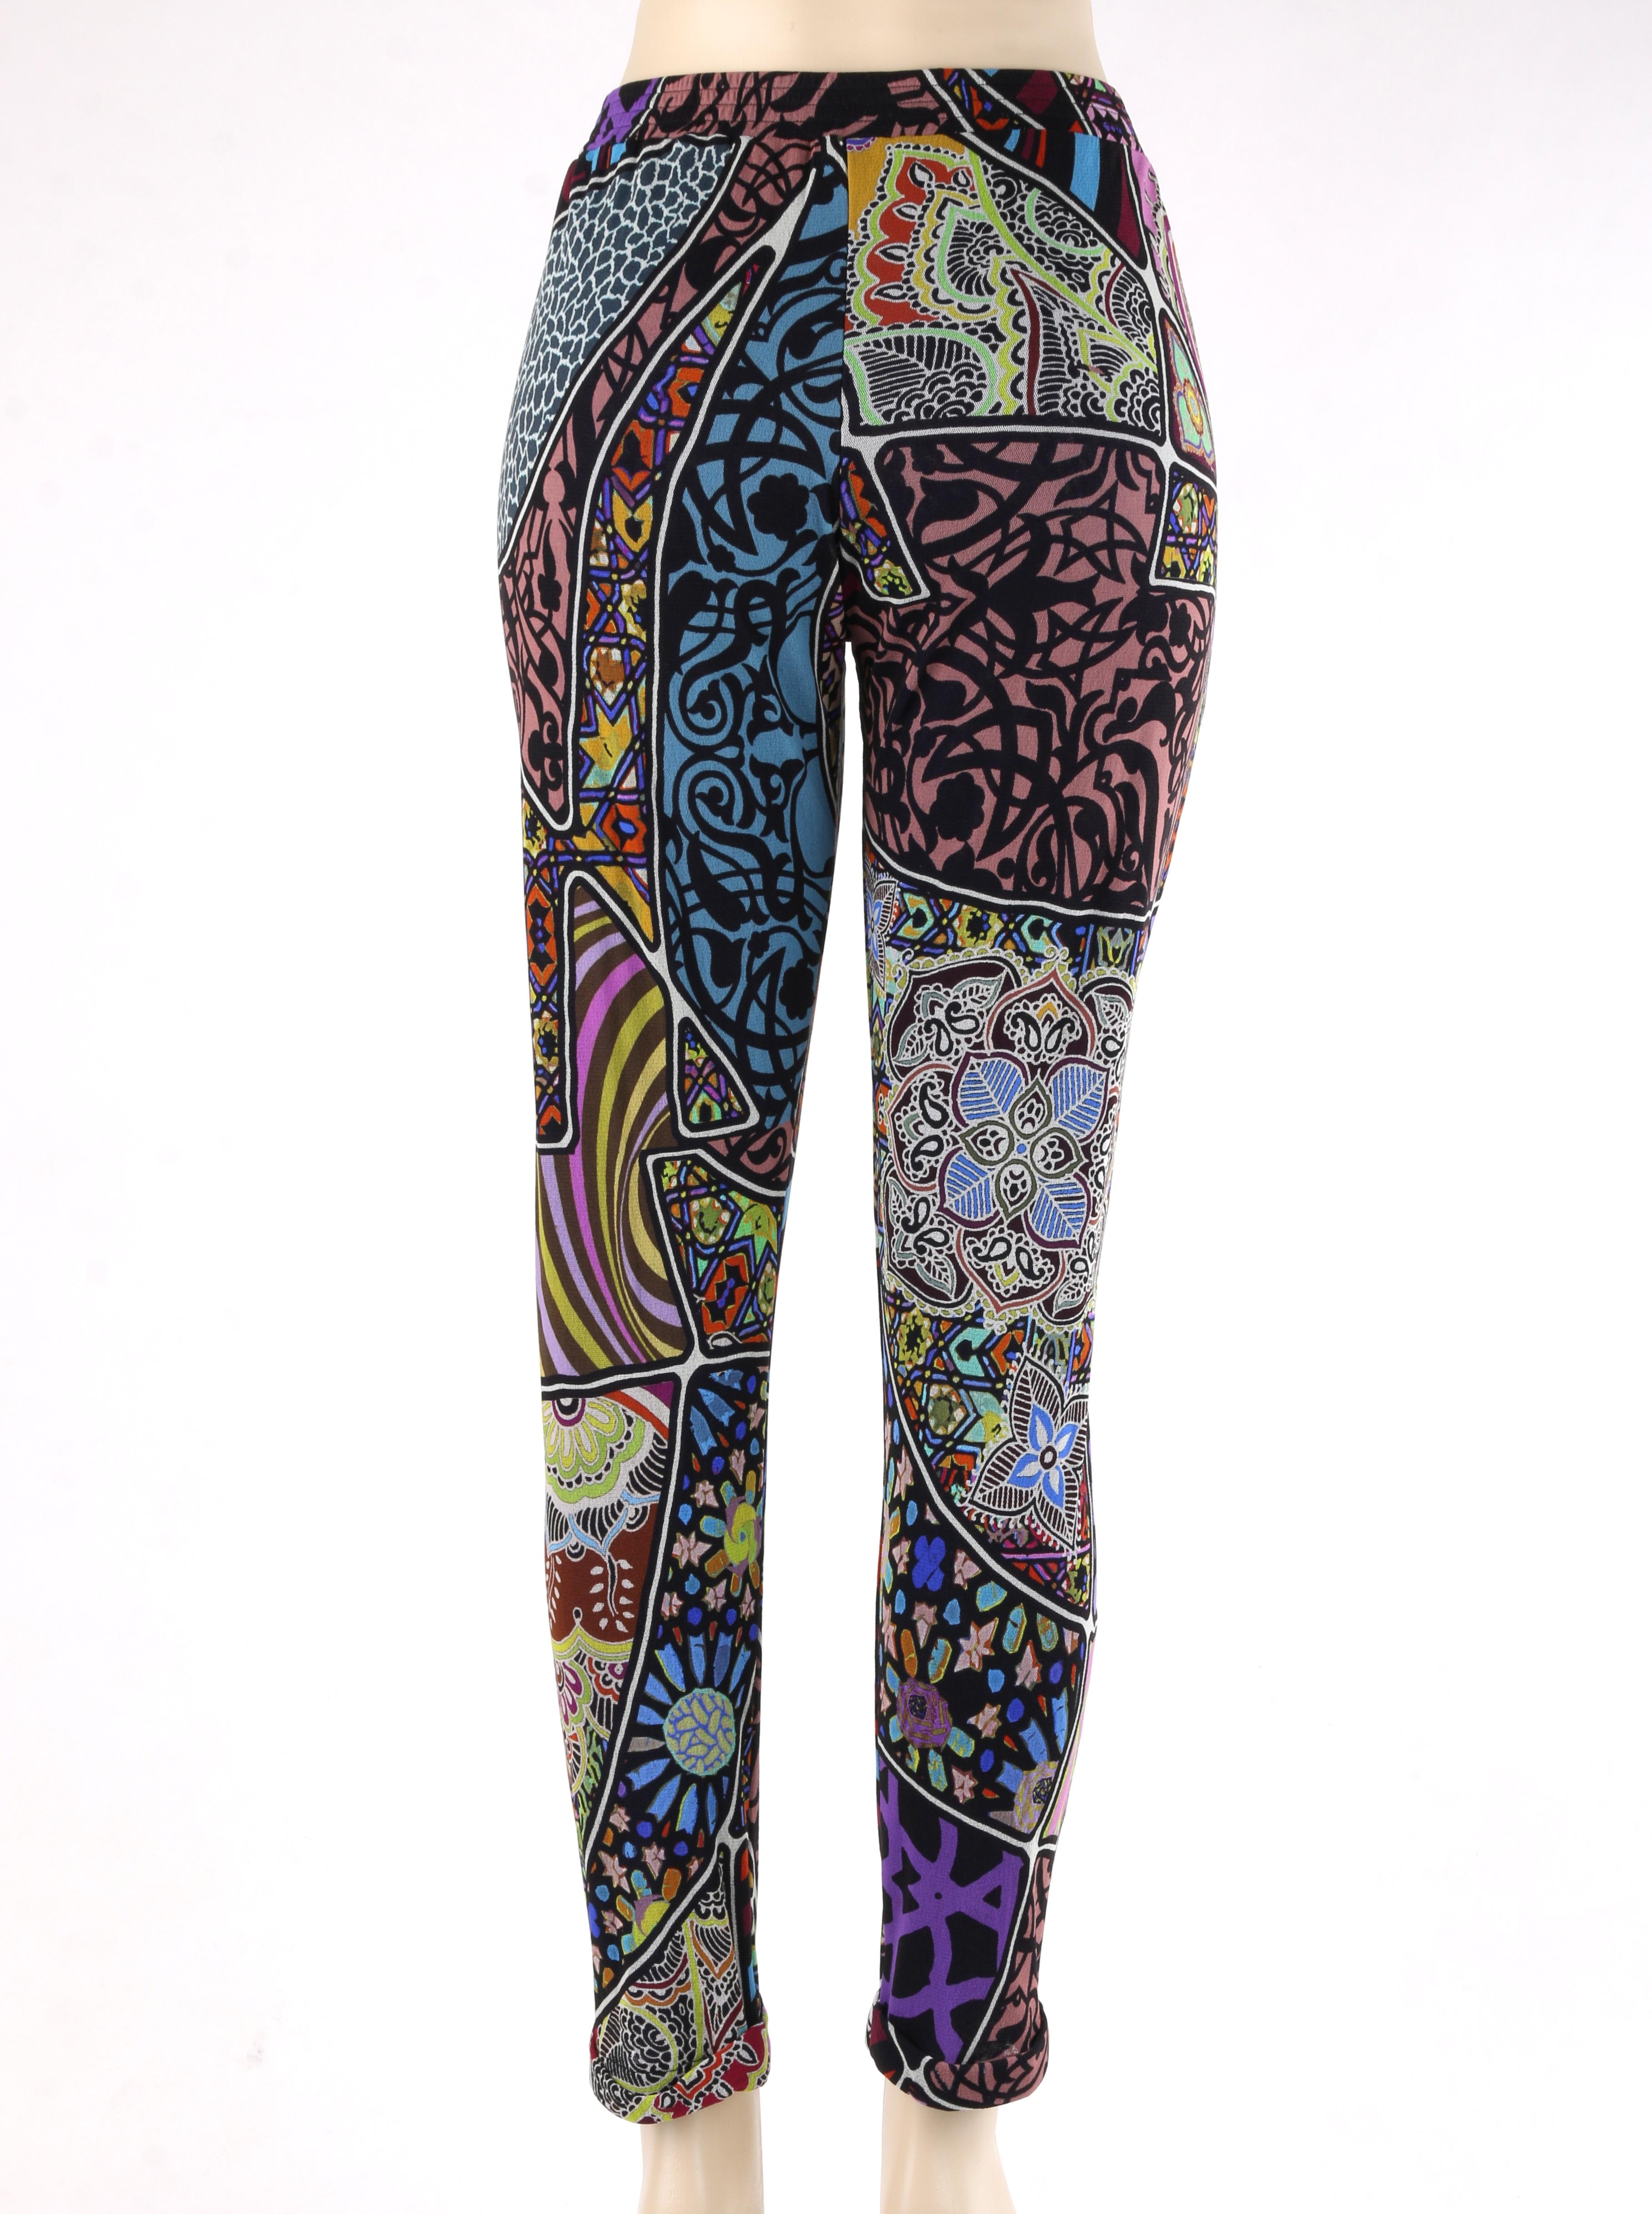 Black FUZZI Jean-Paul Gaultier c.2000's Multicolor Mixed Pattern Mesh Legging Pants